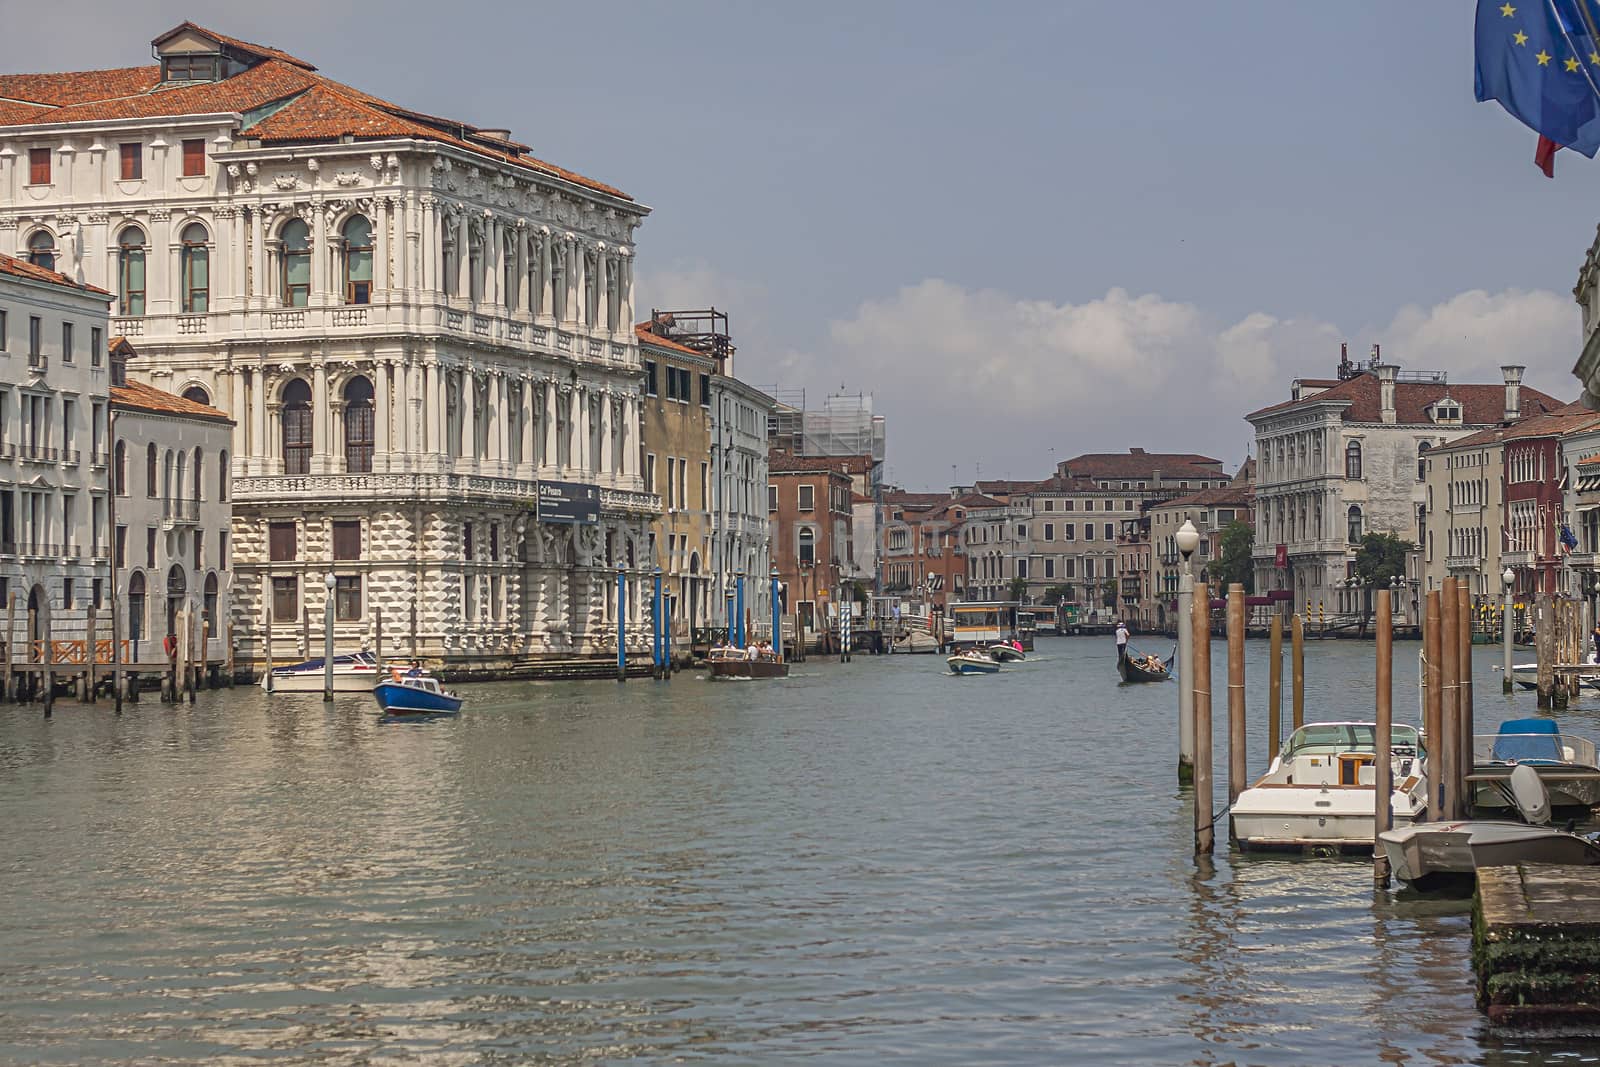 Canal grande in Venice landscape 2 by pippocarlot